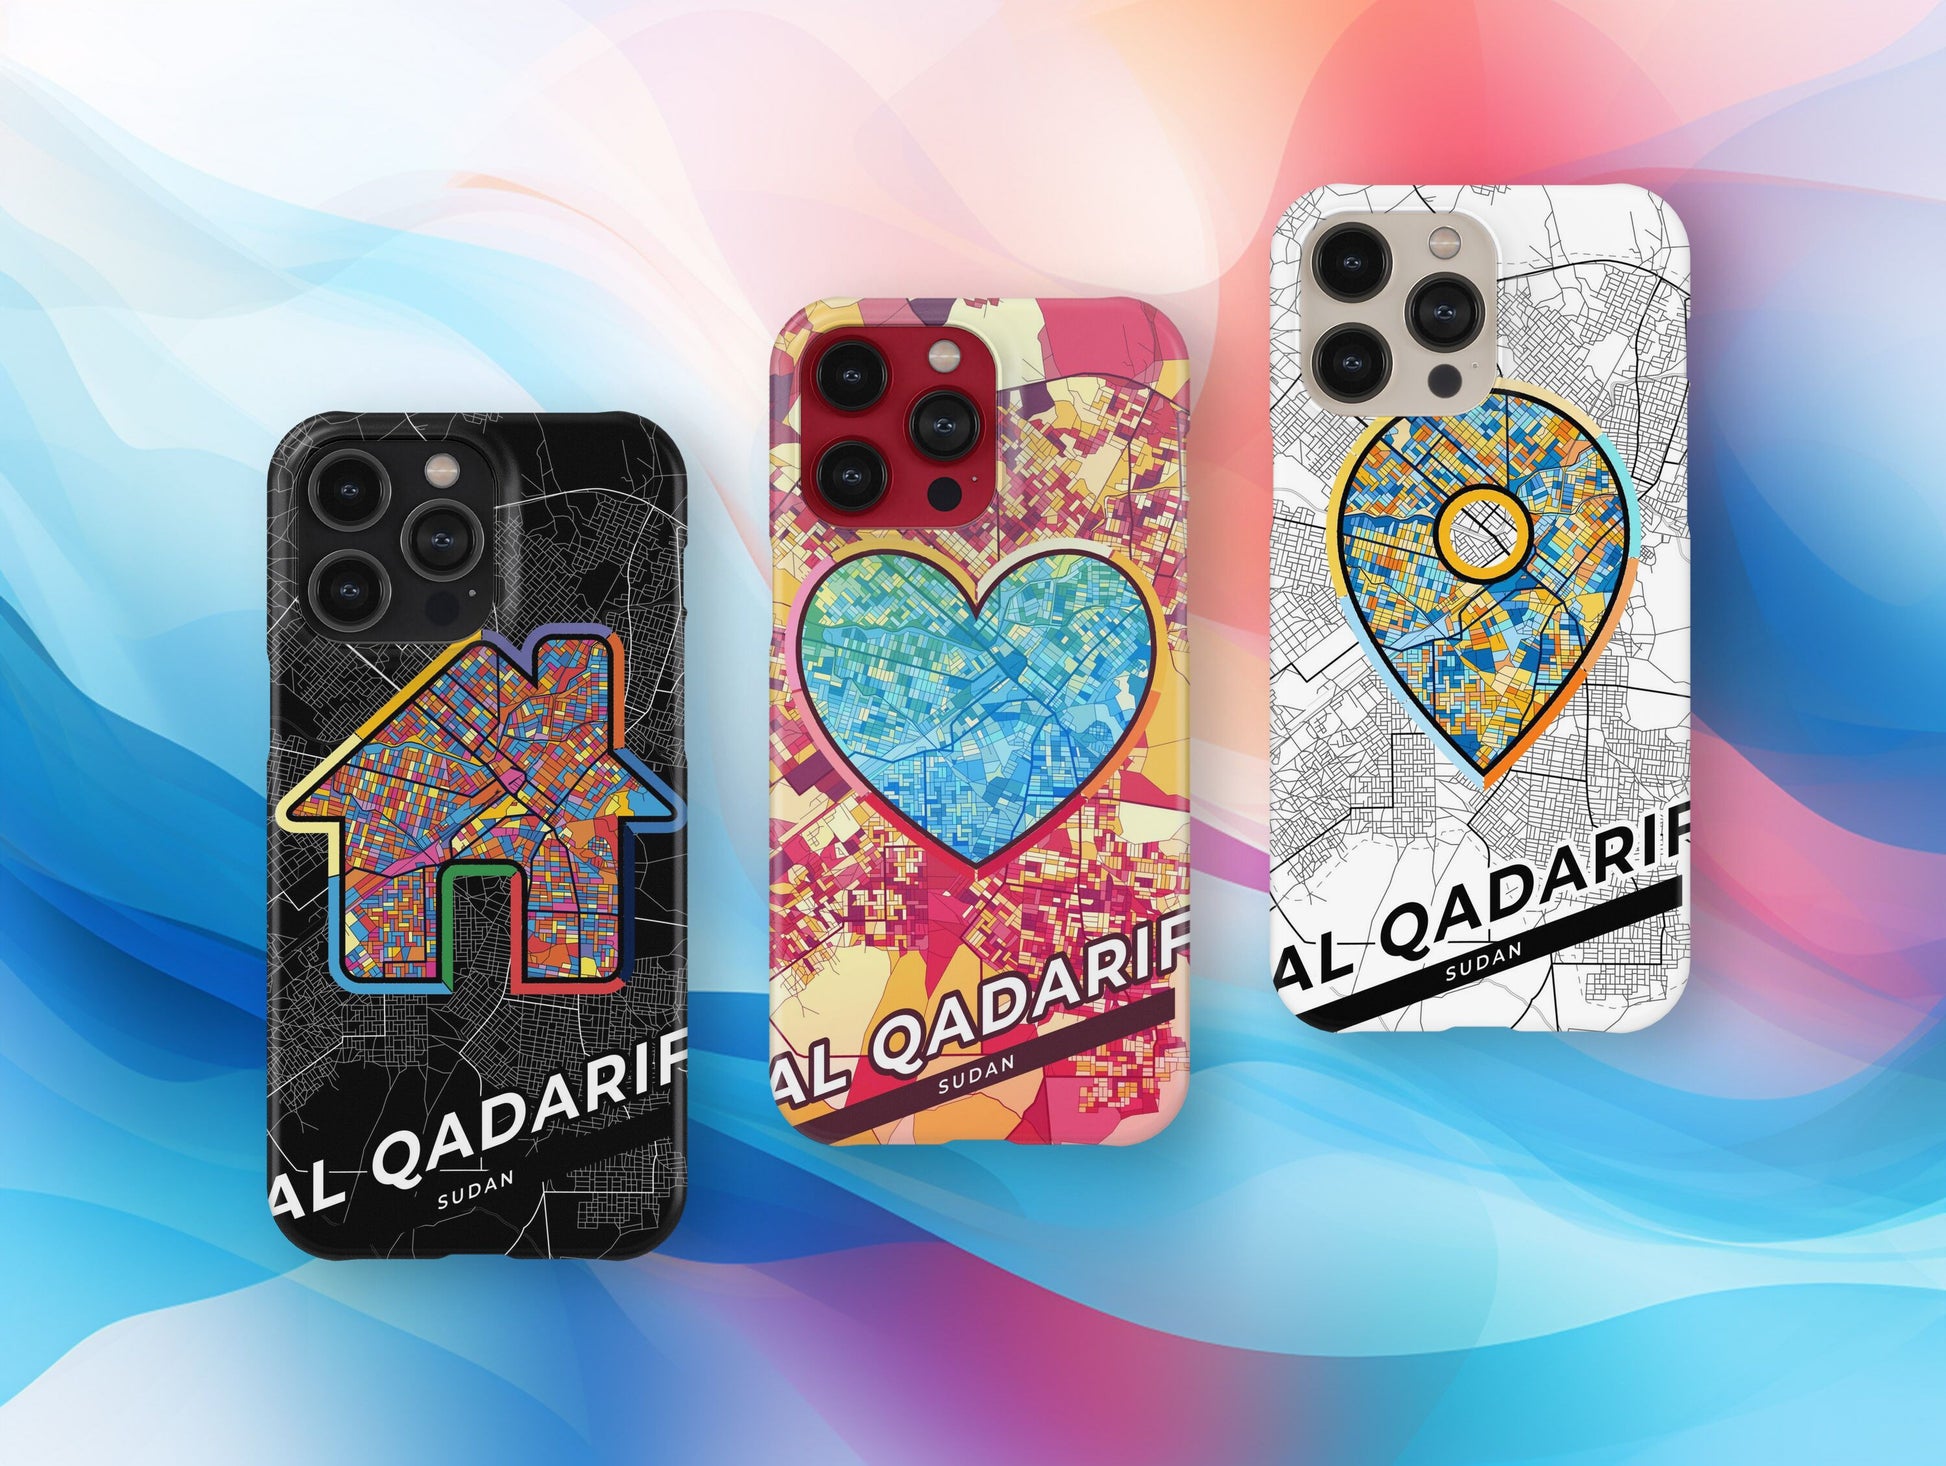 Al Qadarif Sudan slim phone case with colorful icon. Birthday, wedding or housewarming gift. Couple match cases.